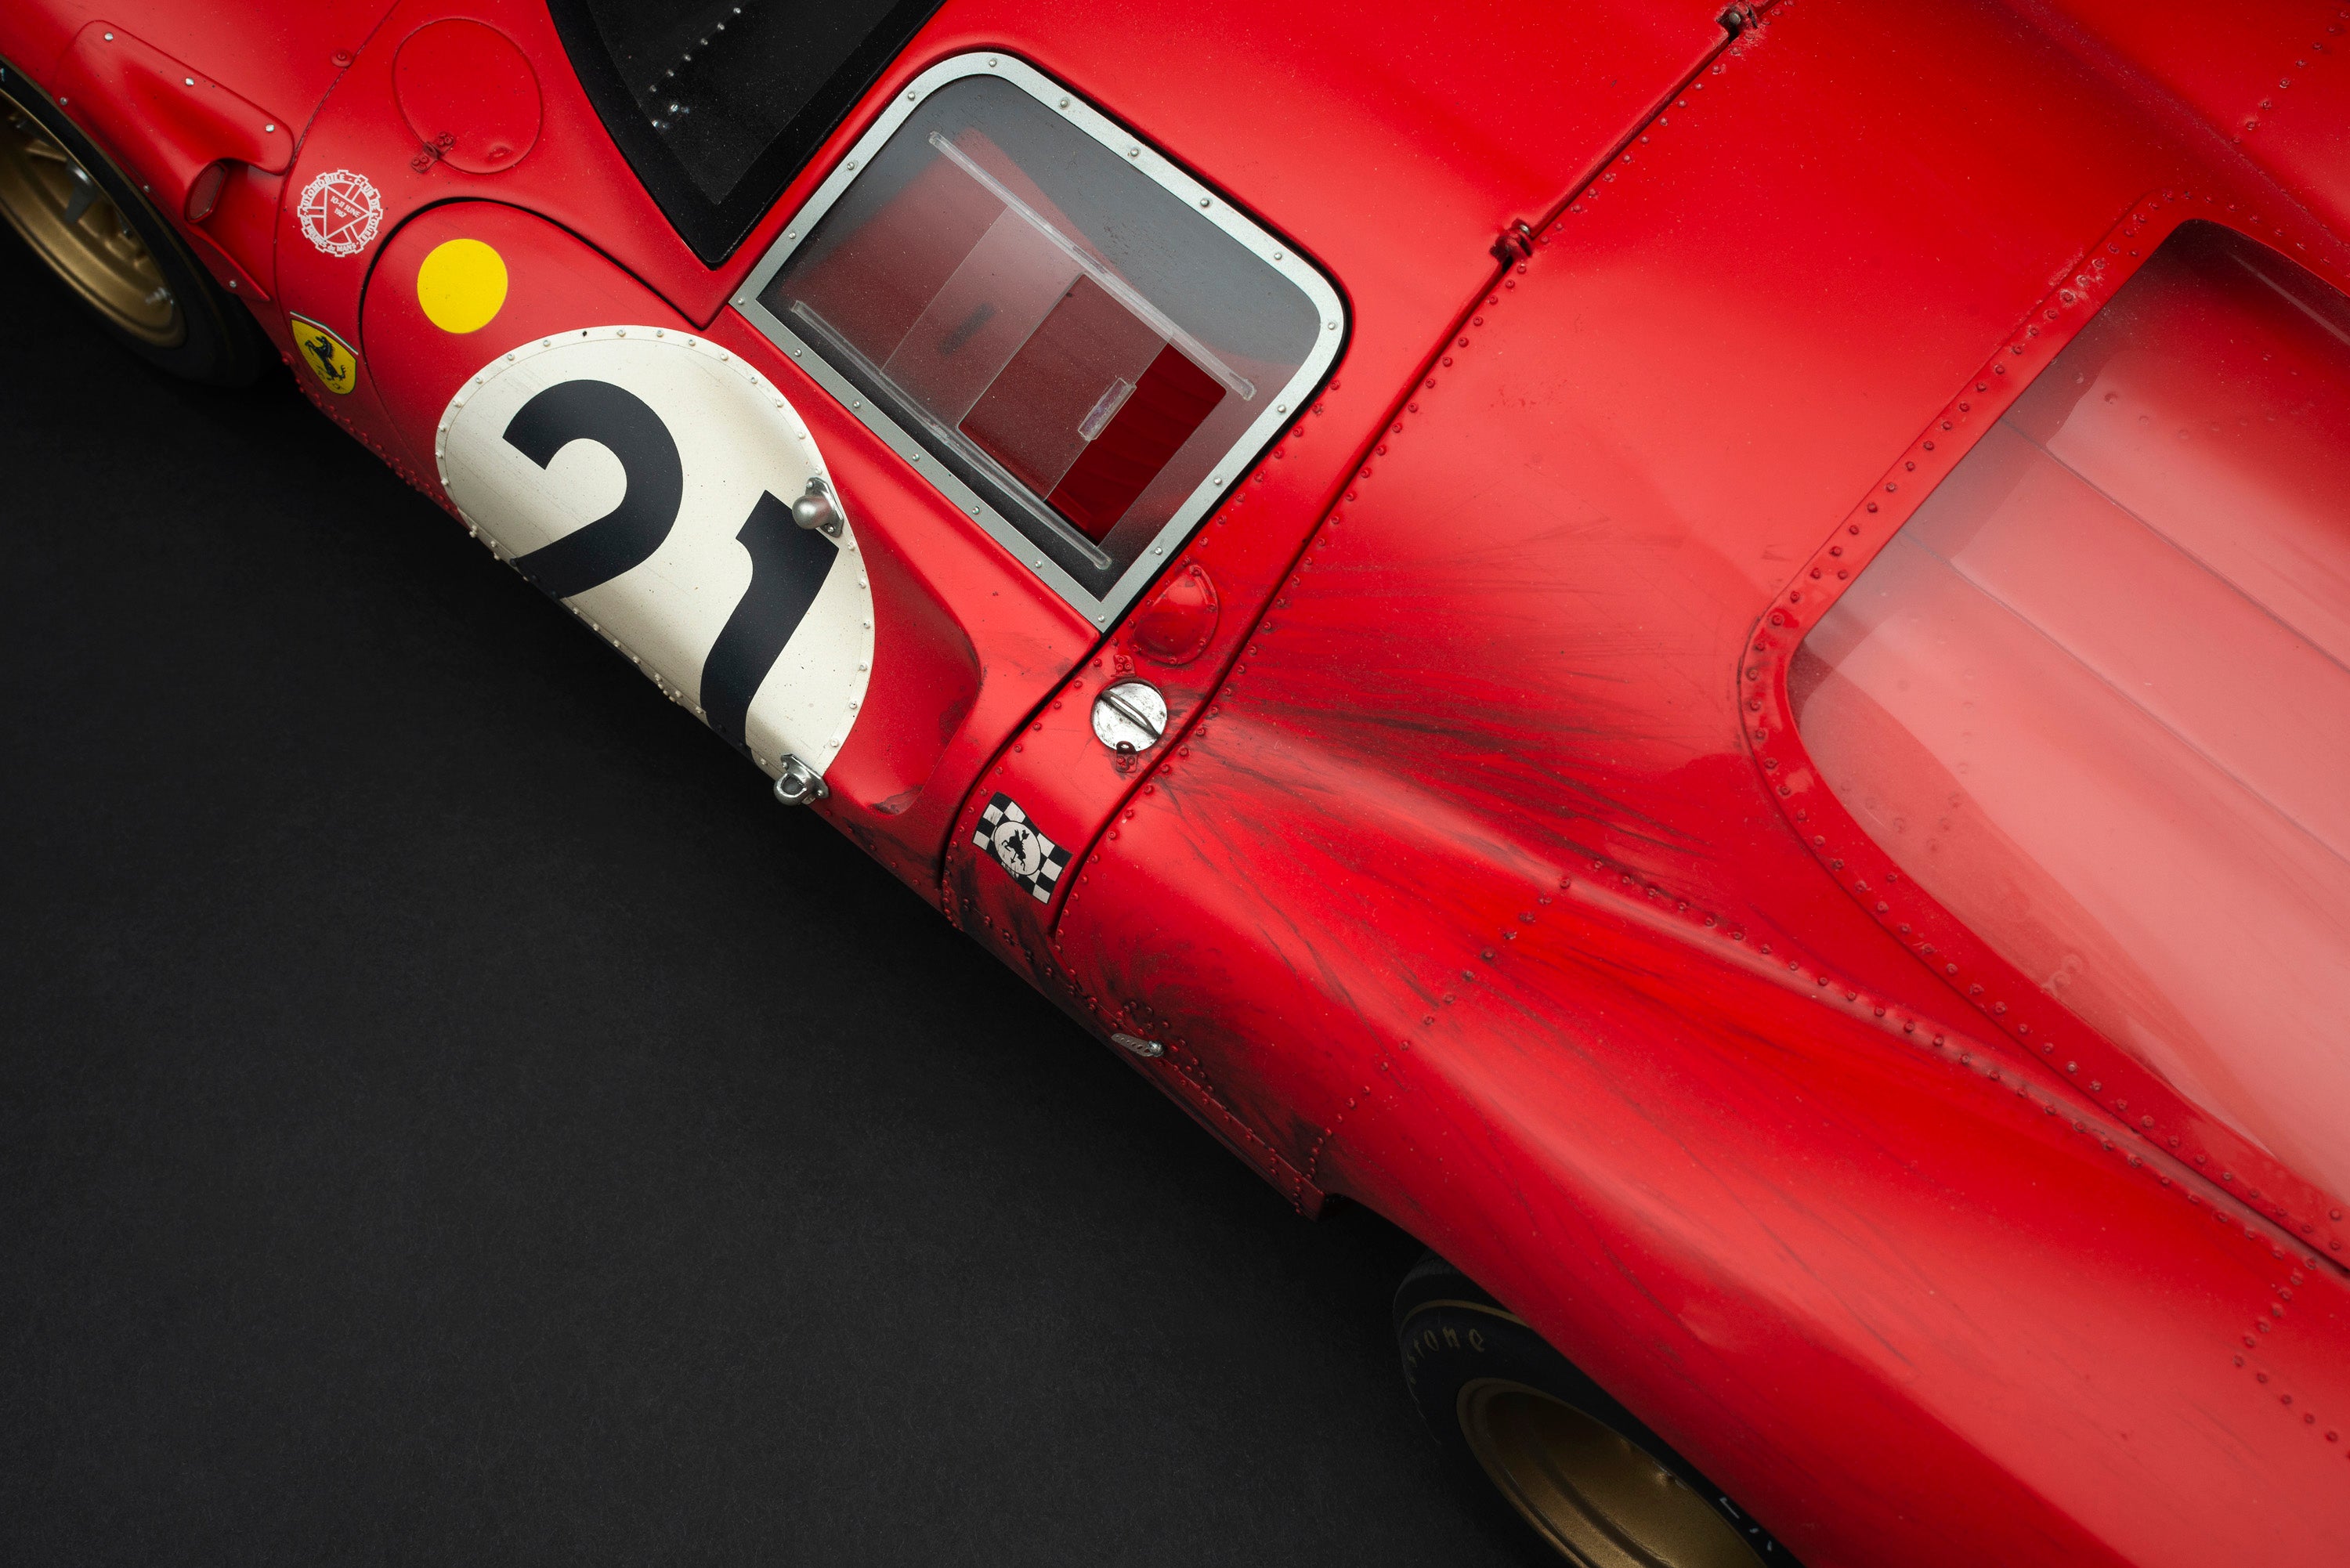 Amalgam Collection Ferrari 330 P4 1967 Le Mans 1:18 Scale Model Car